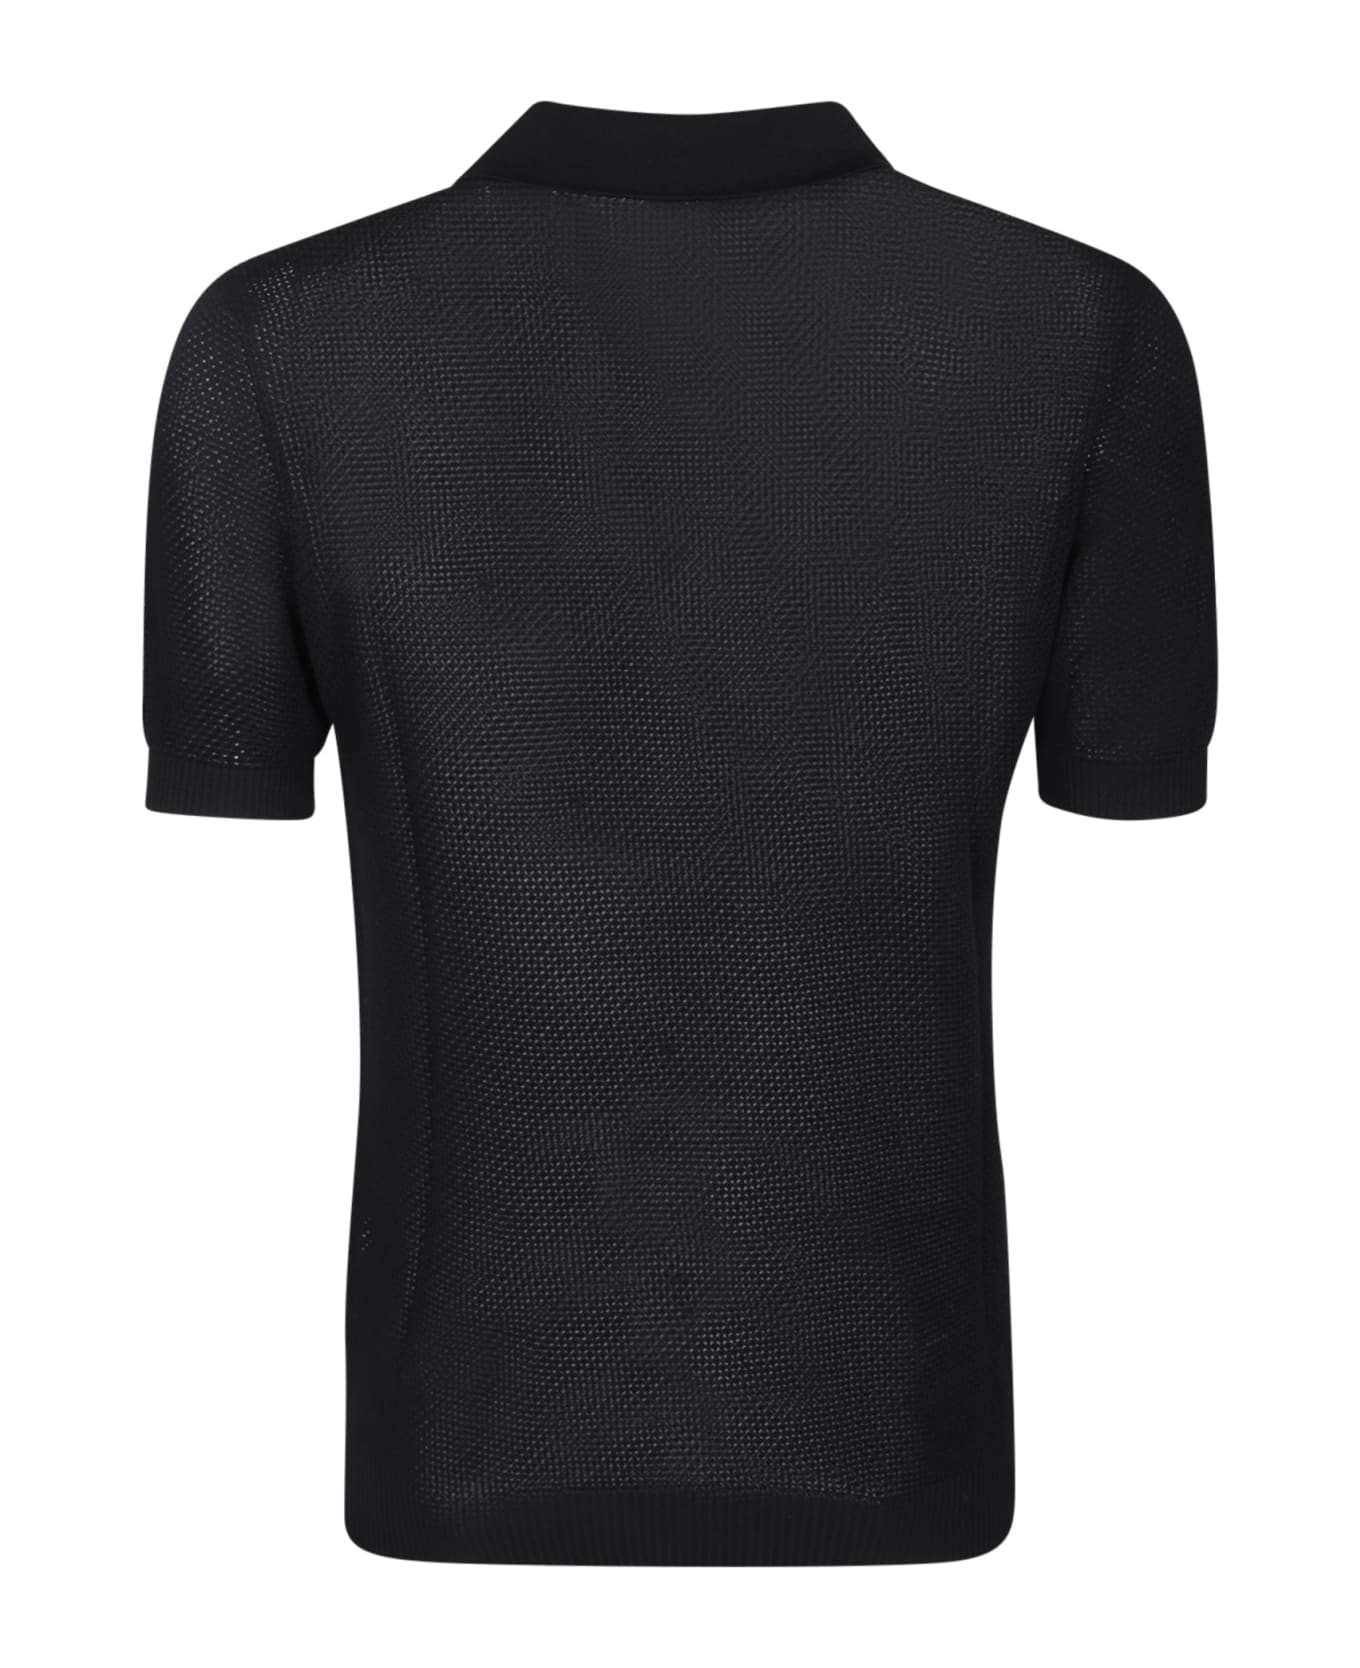 Tagliatore Crochet Black Polo Shirt - Black